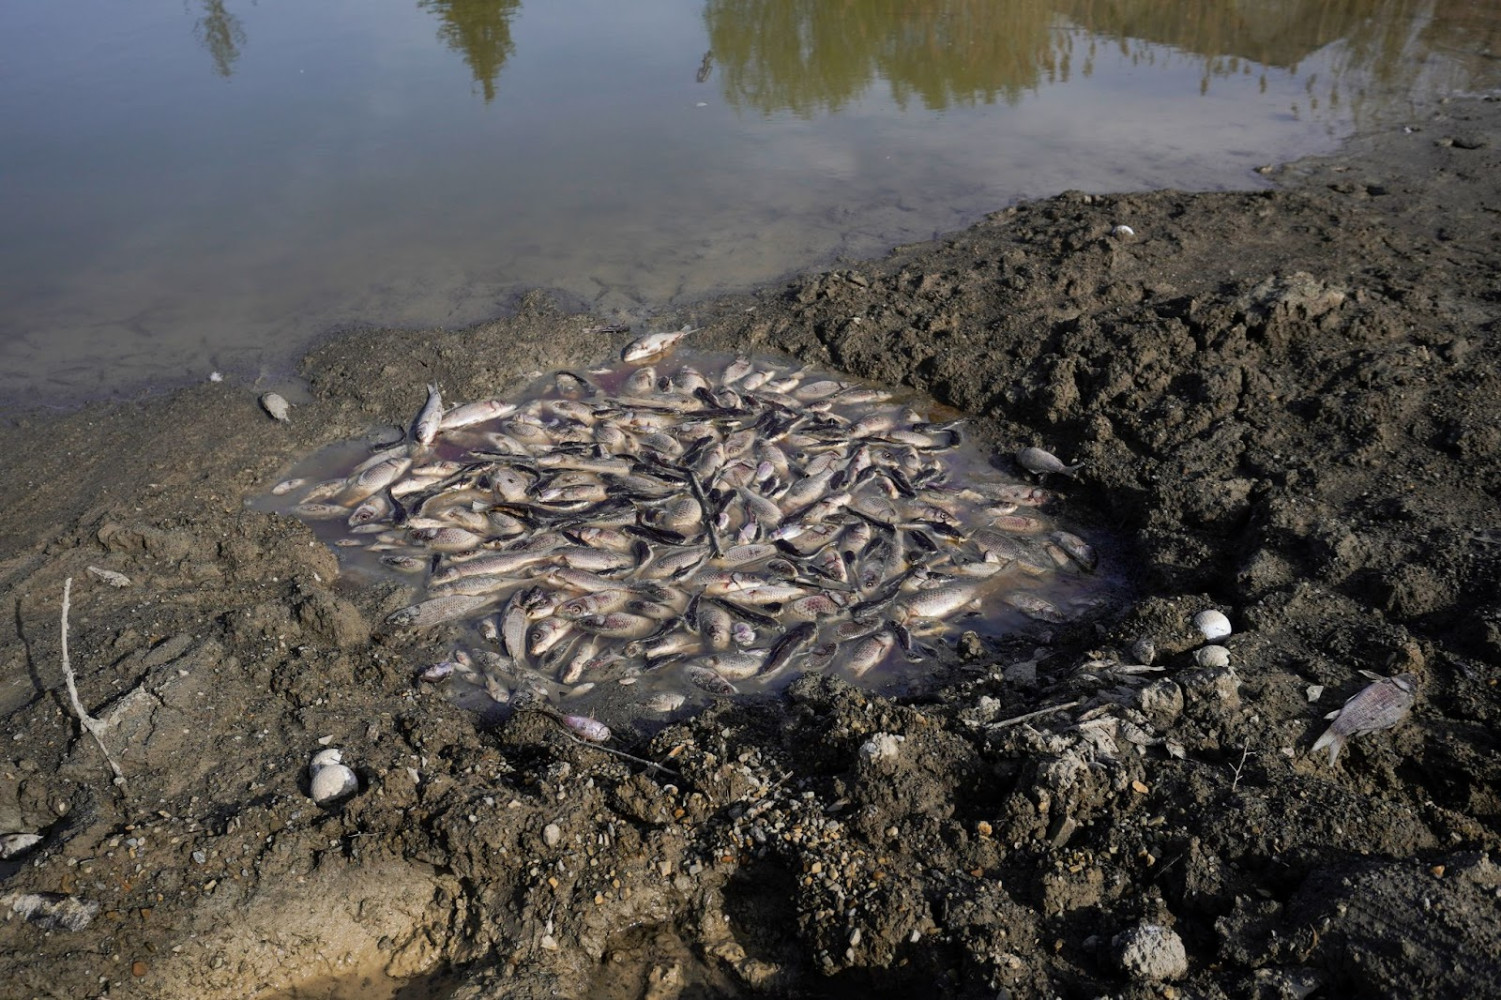 Aquatic animals left to die after developer drains wetlands in Brampton, leaving residents horrified